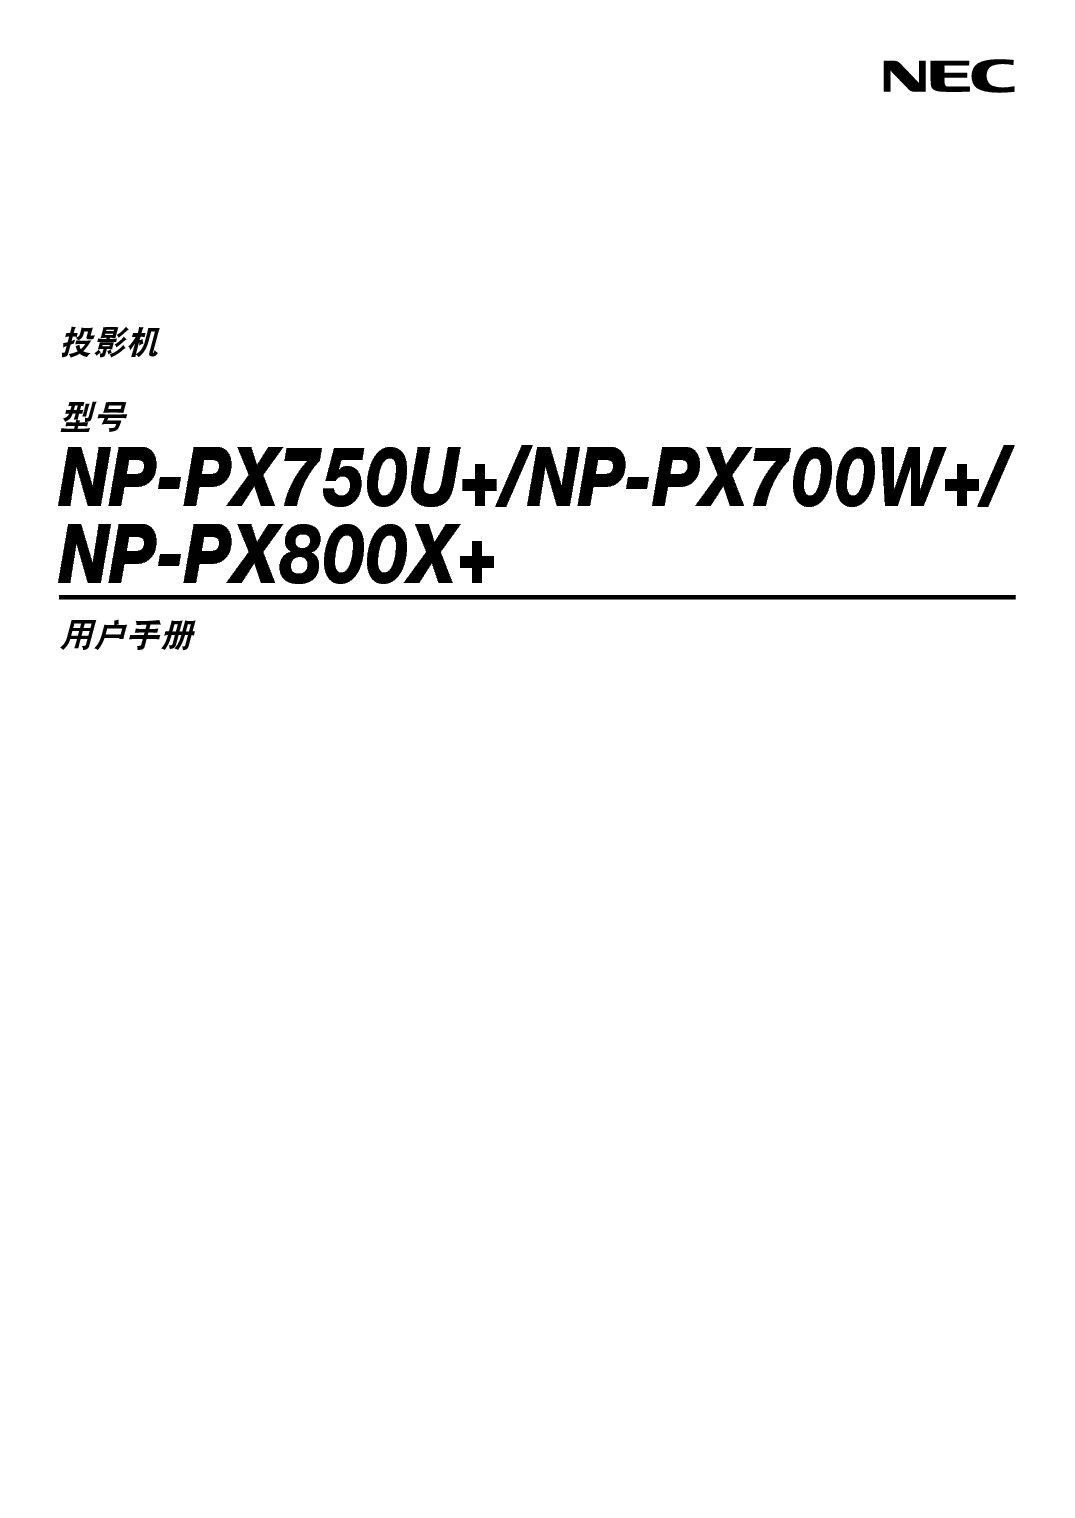 NEC NP-PX700W+ 用户手册 封面